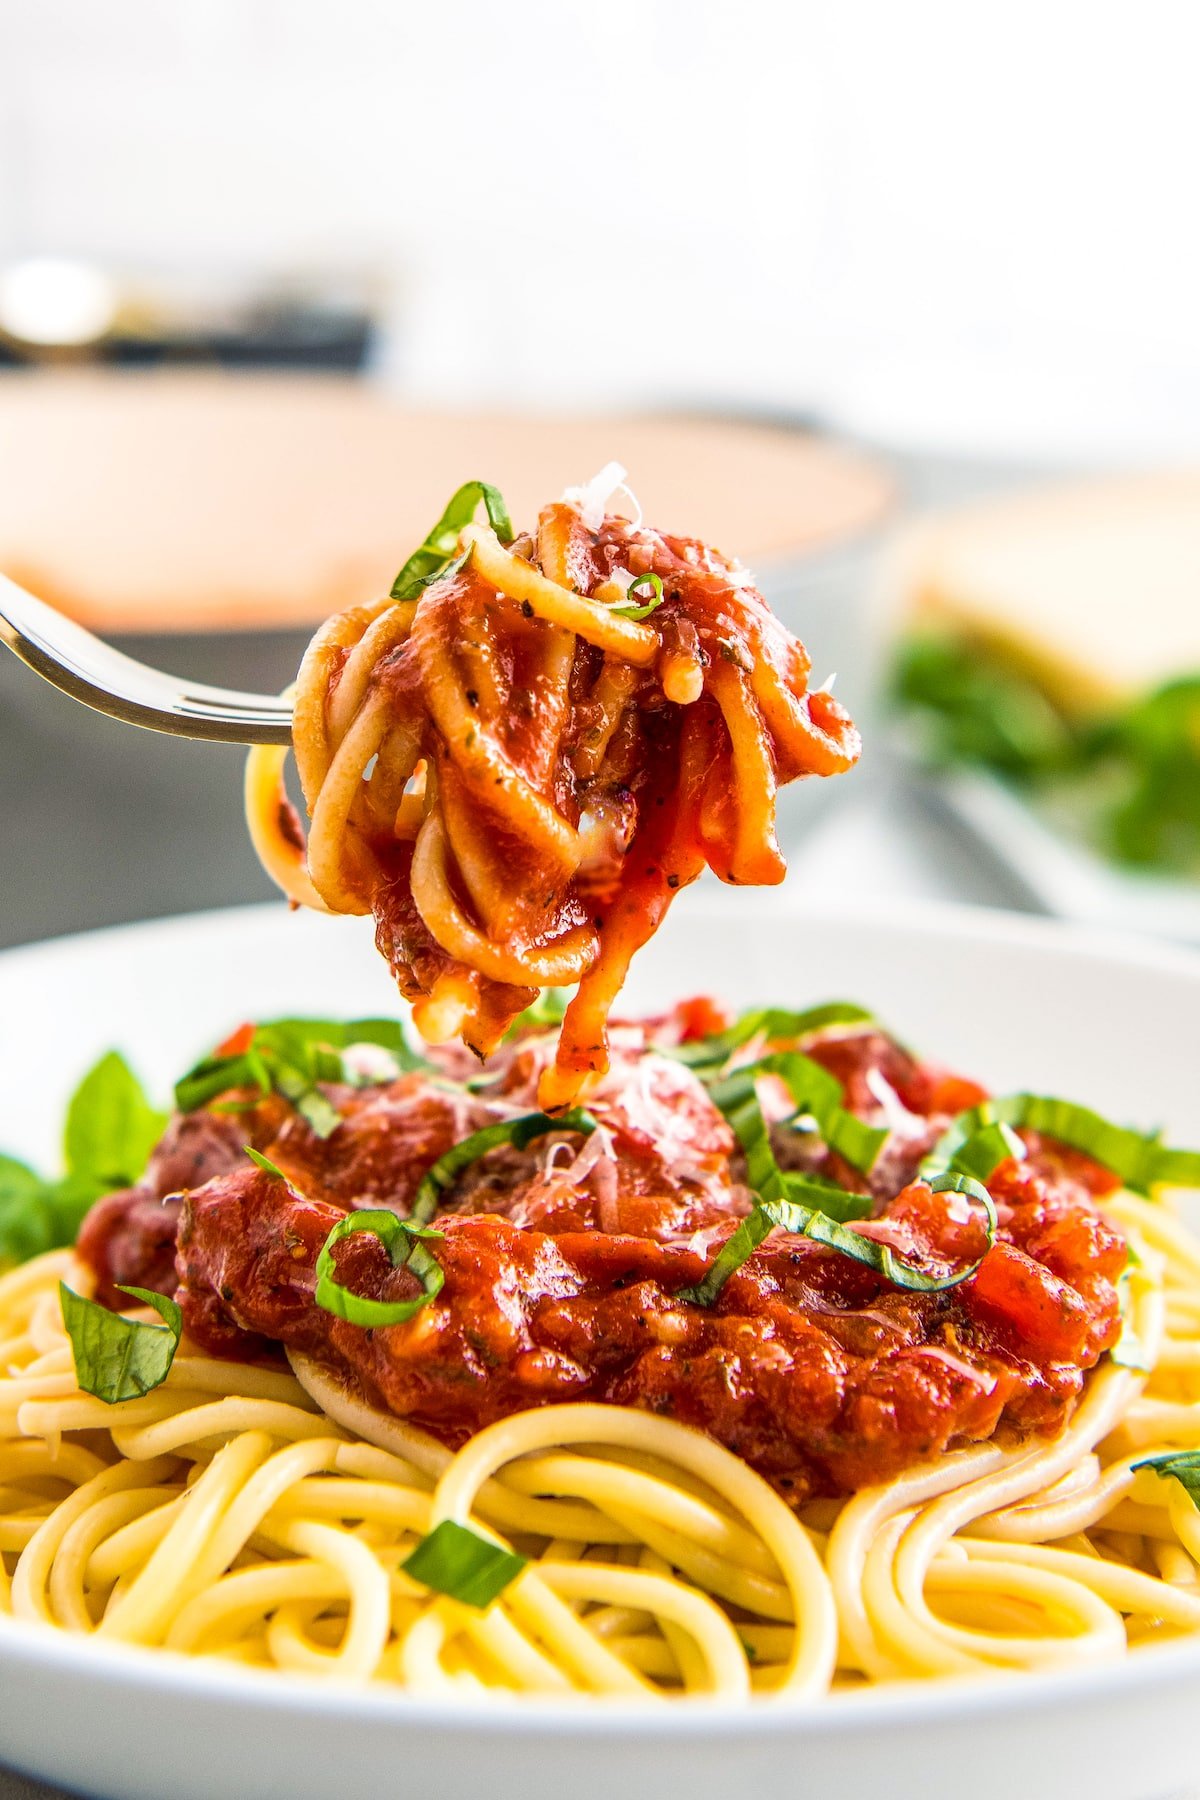 A forkful of spaghetti covered in marinara sauce.